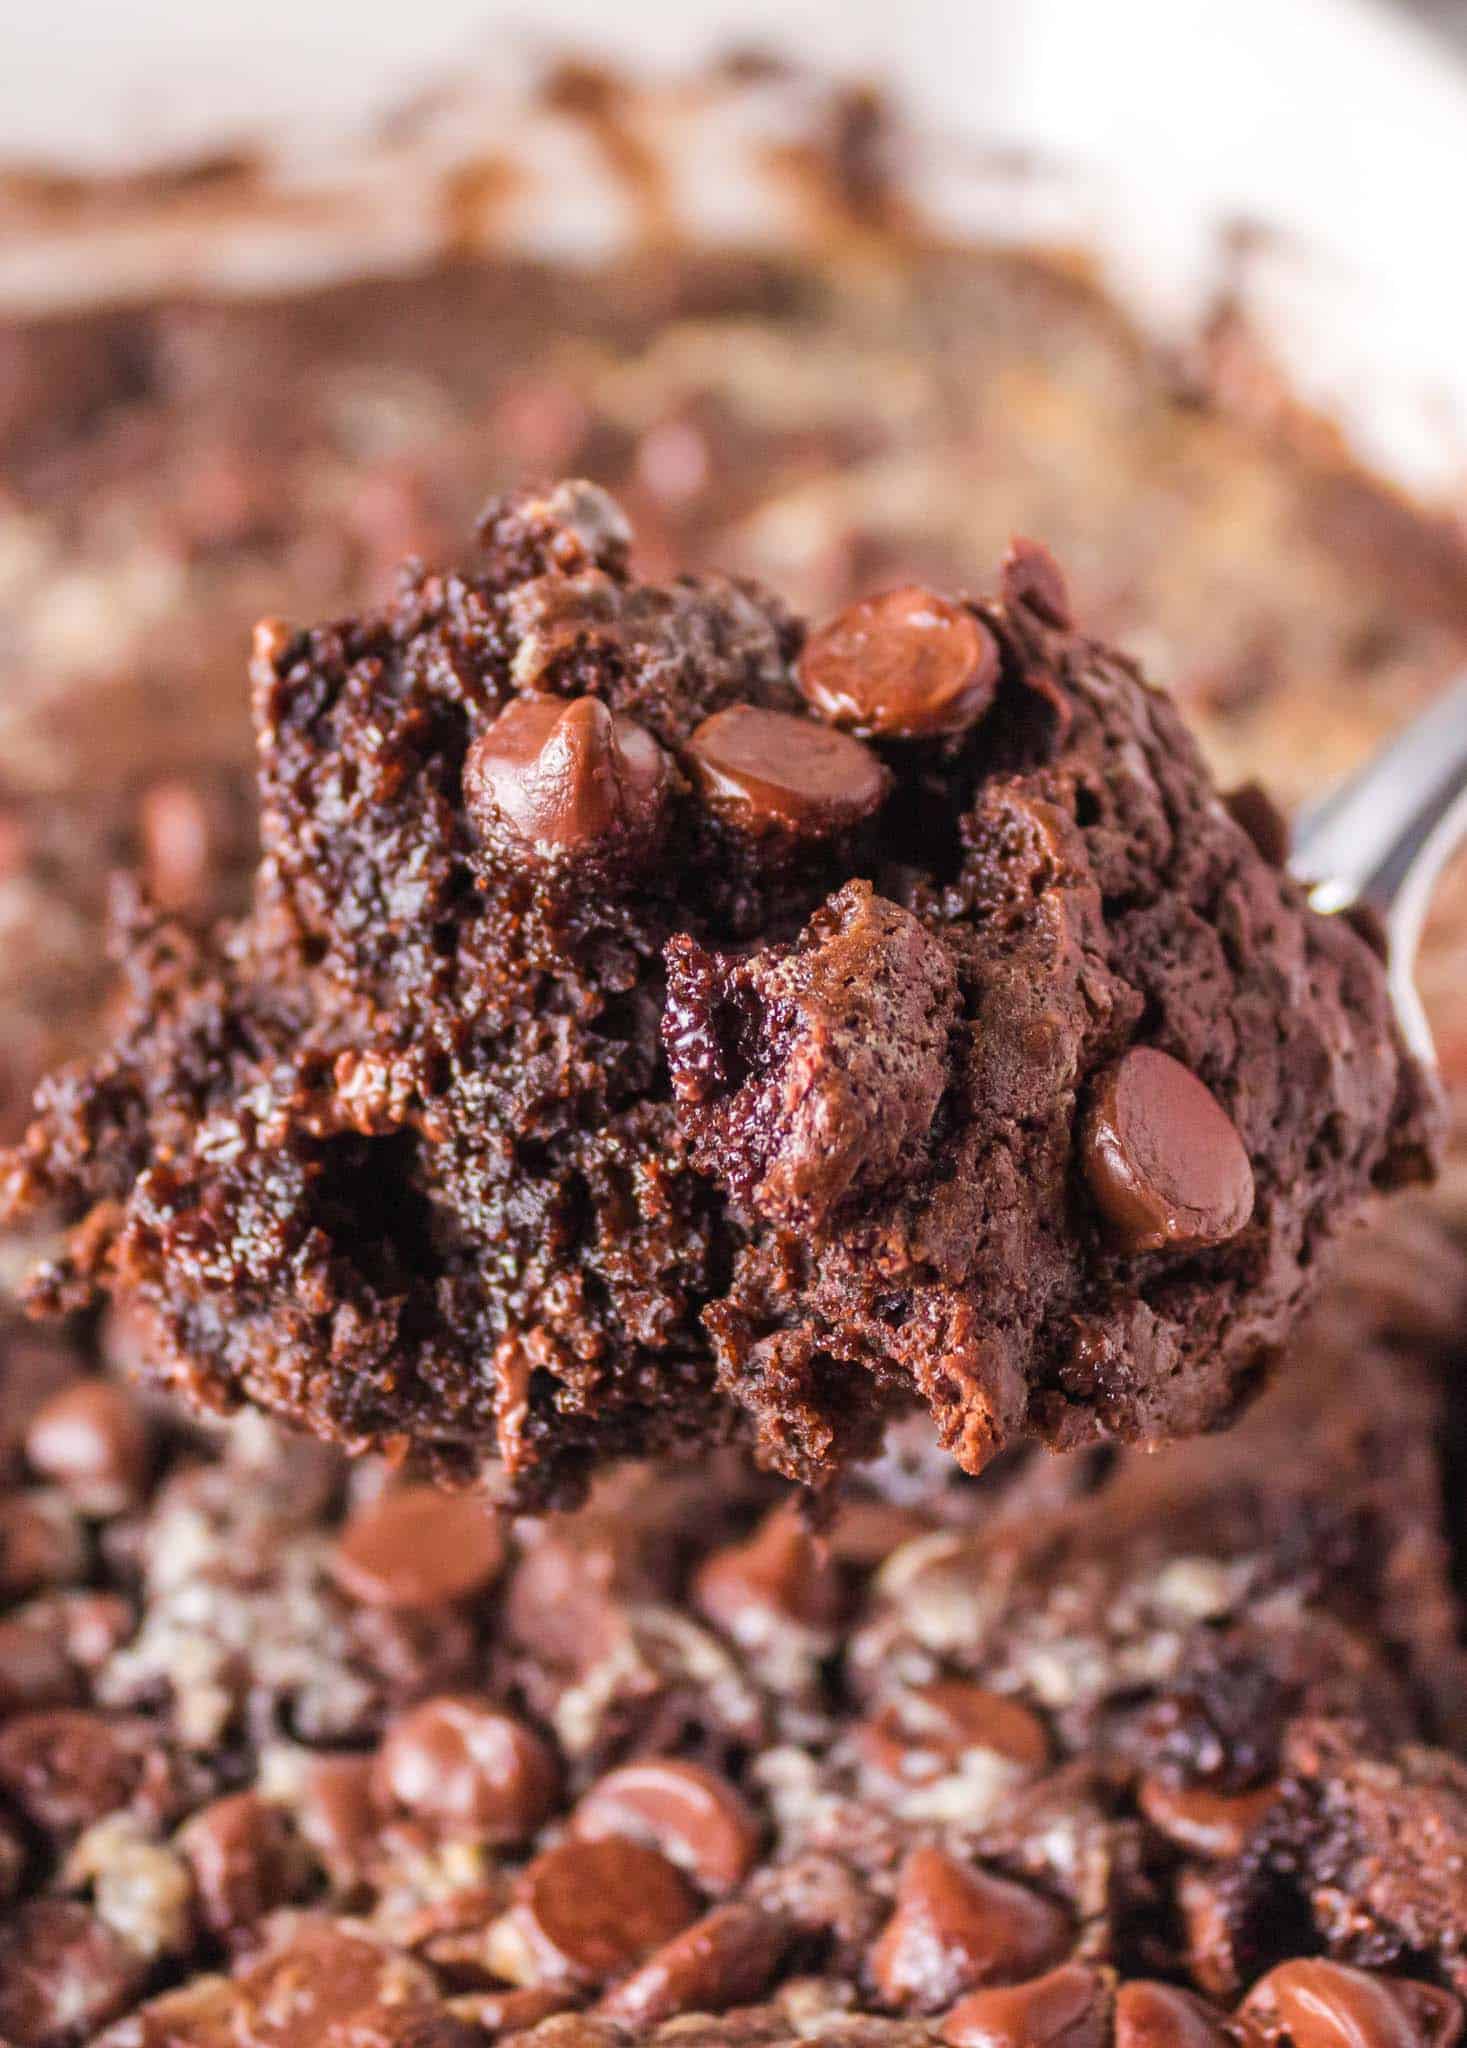 Chocolate Dump Cake is a simple and decadent chocolate dessert recipe using chocolate cake mix, chocolate pudding mix, chocolate chips, milk and butter.